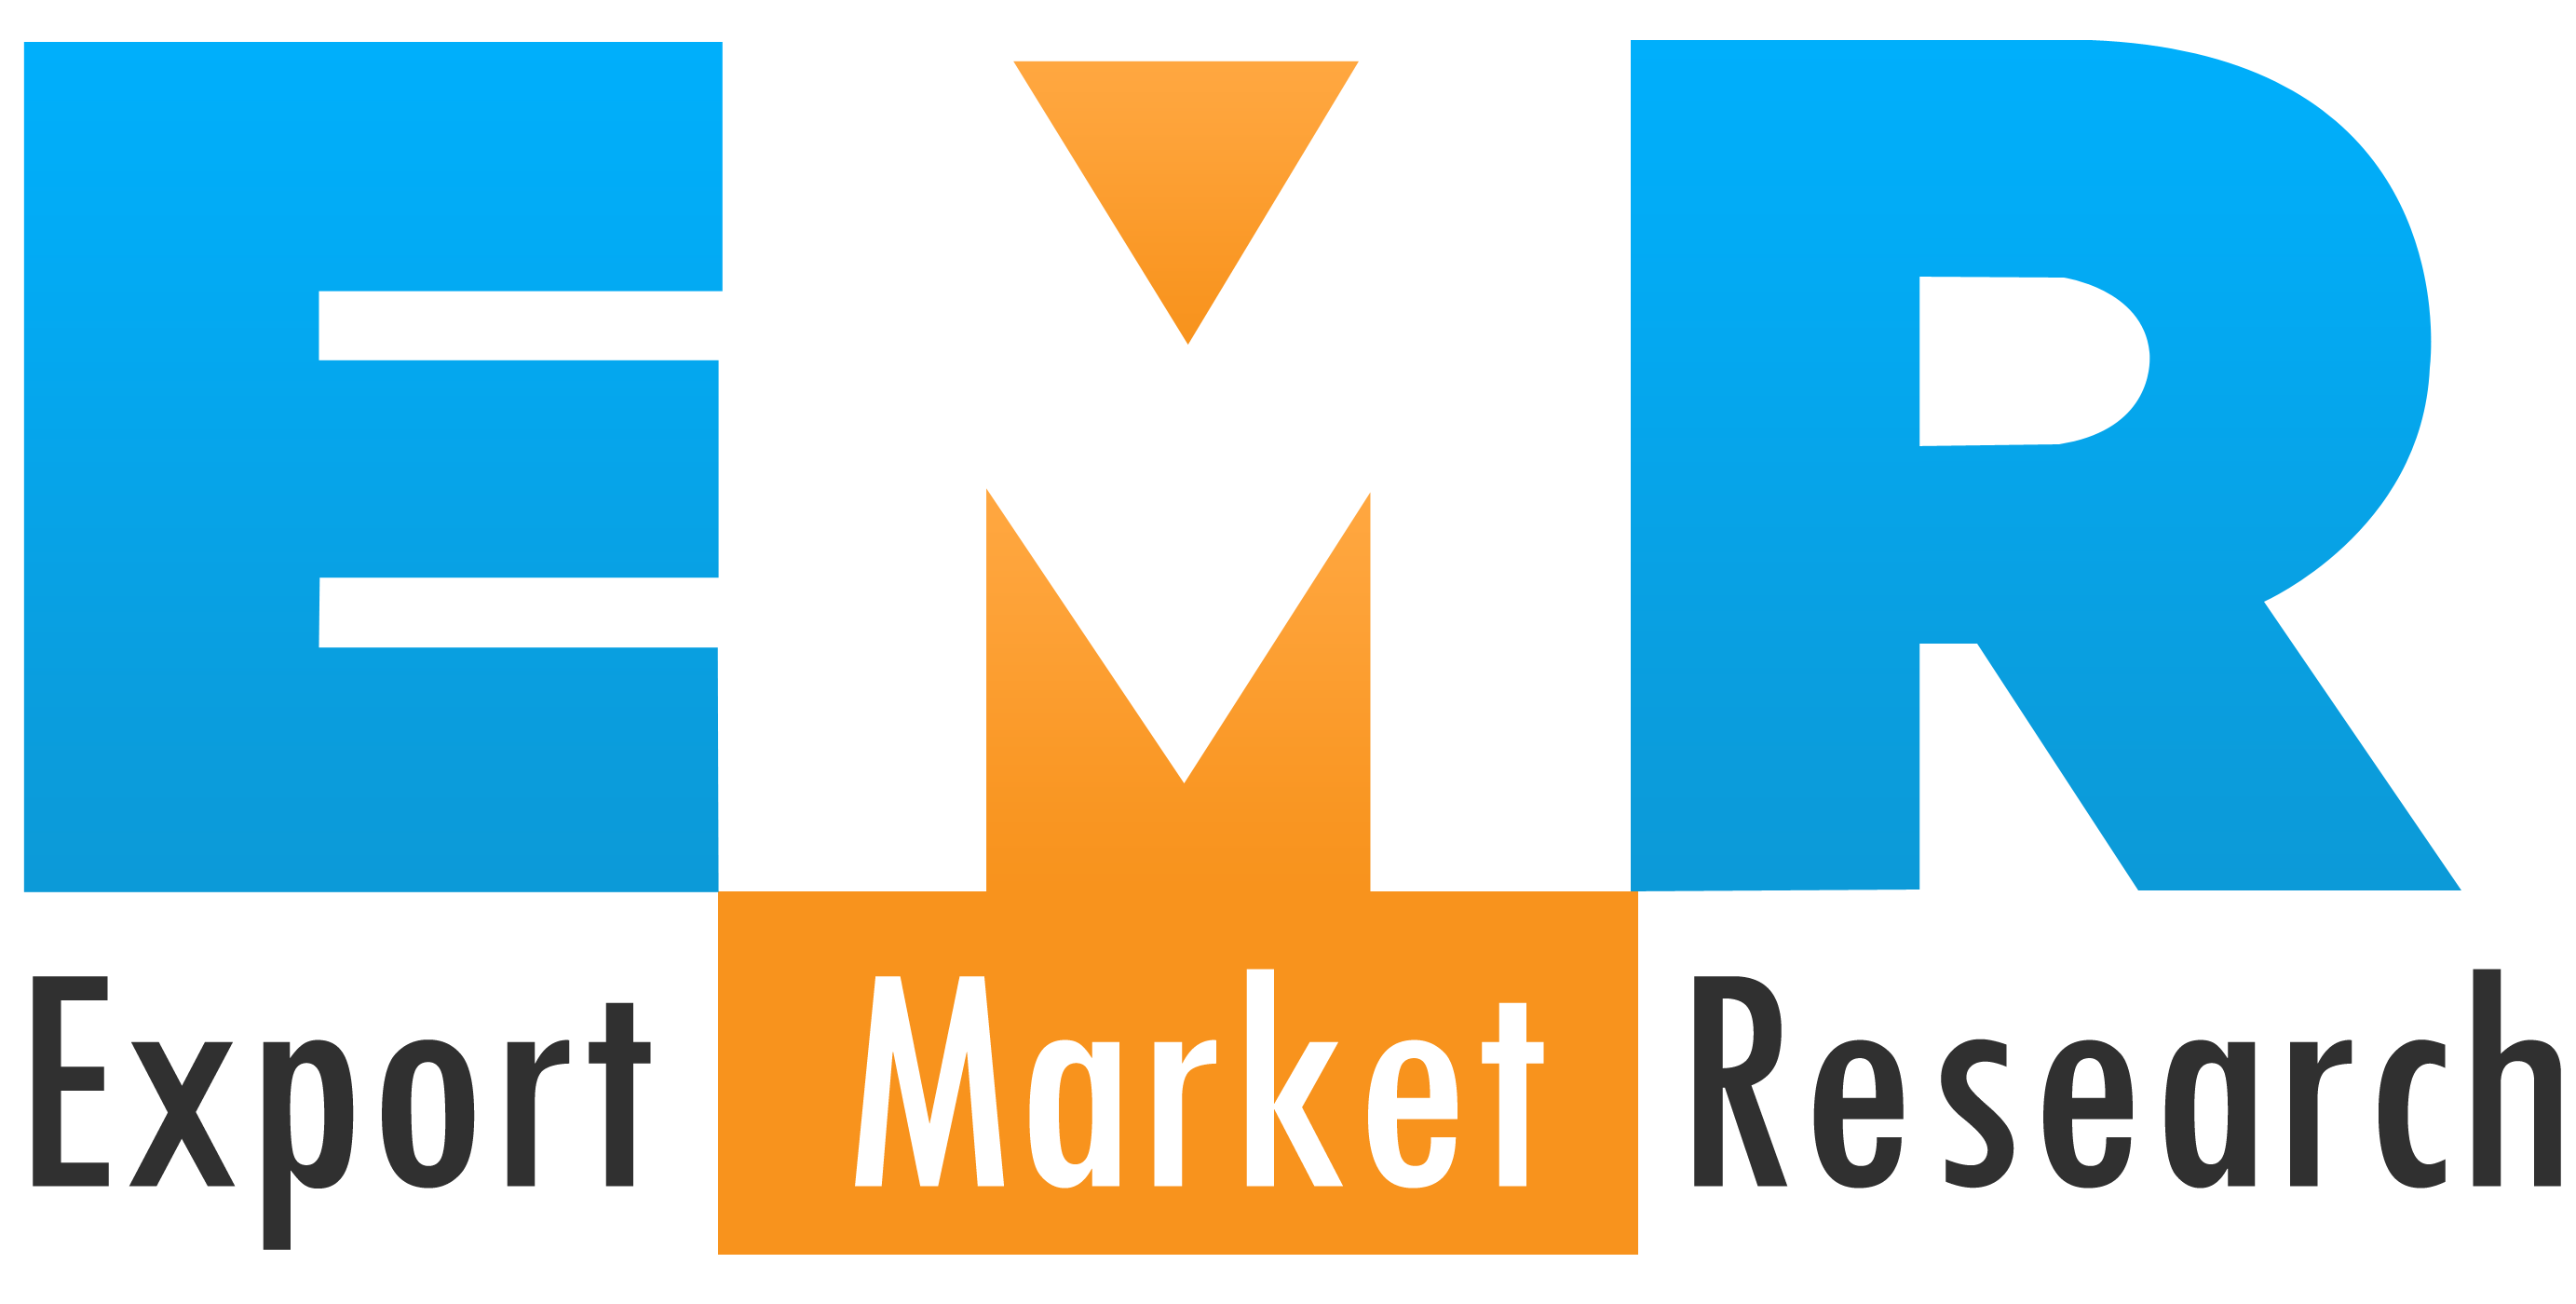 Export Market Research